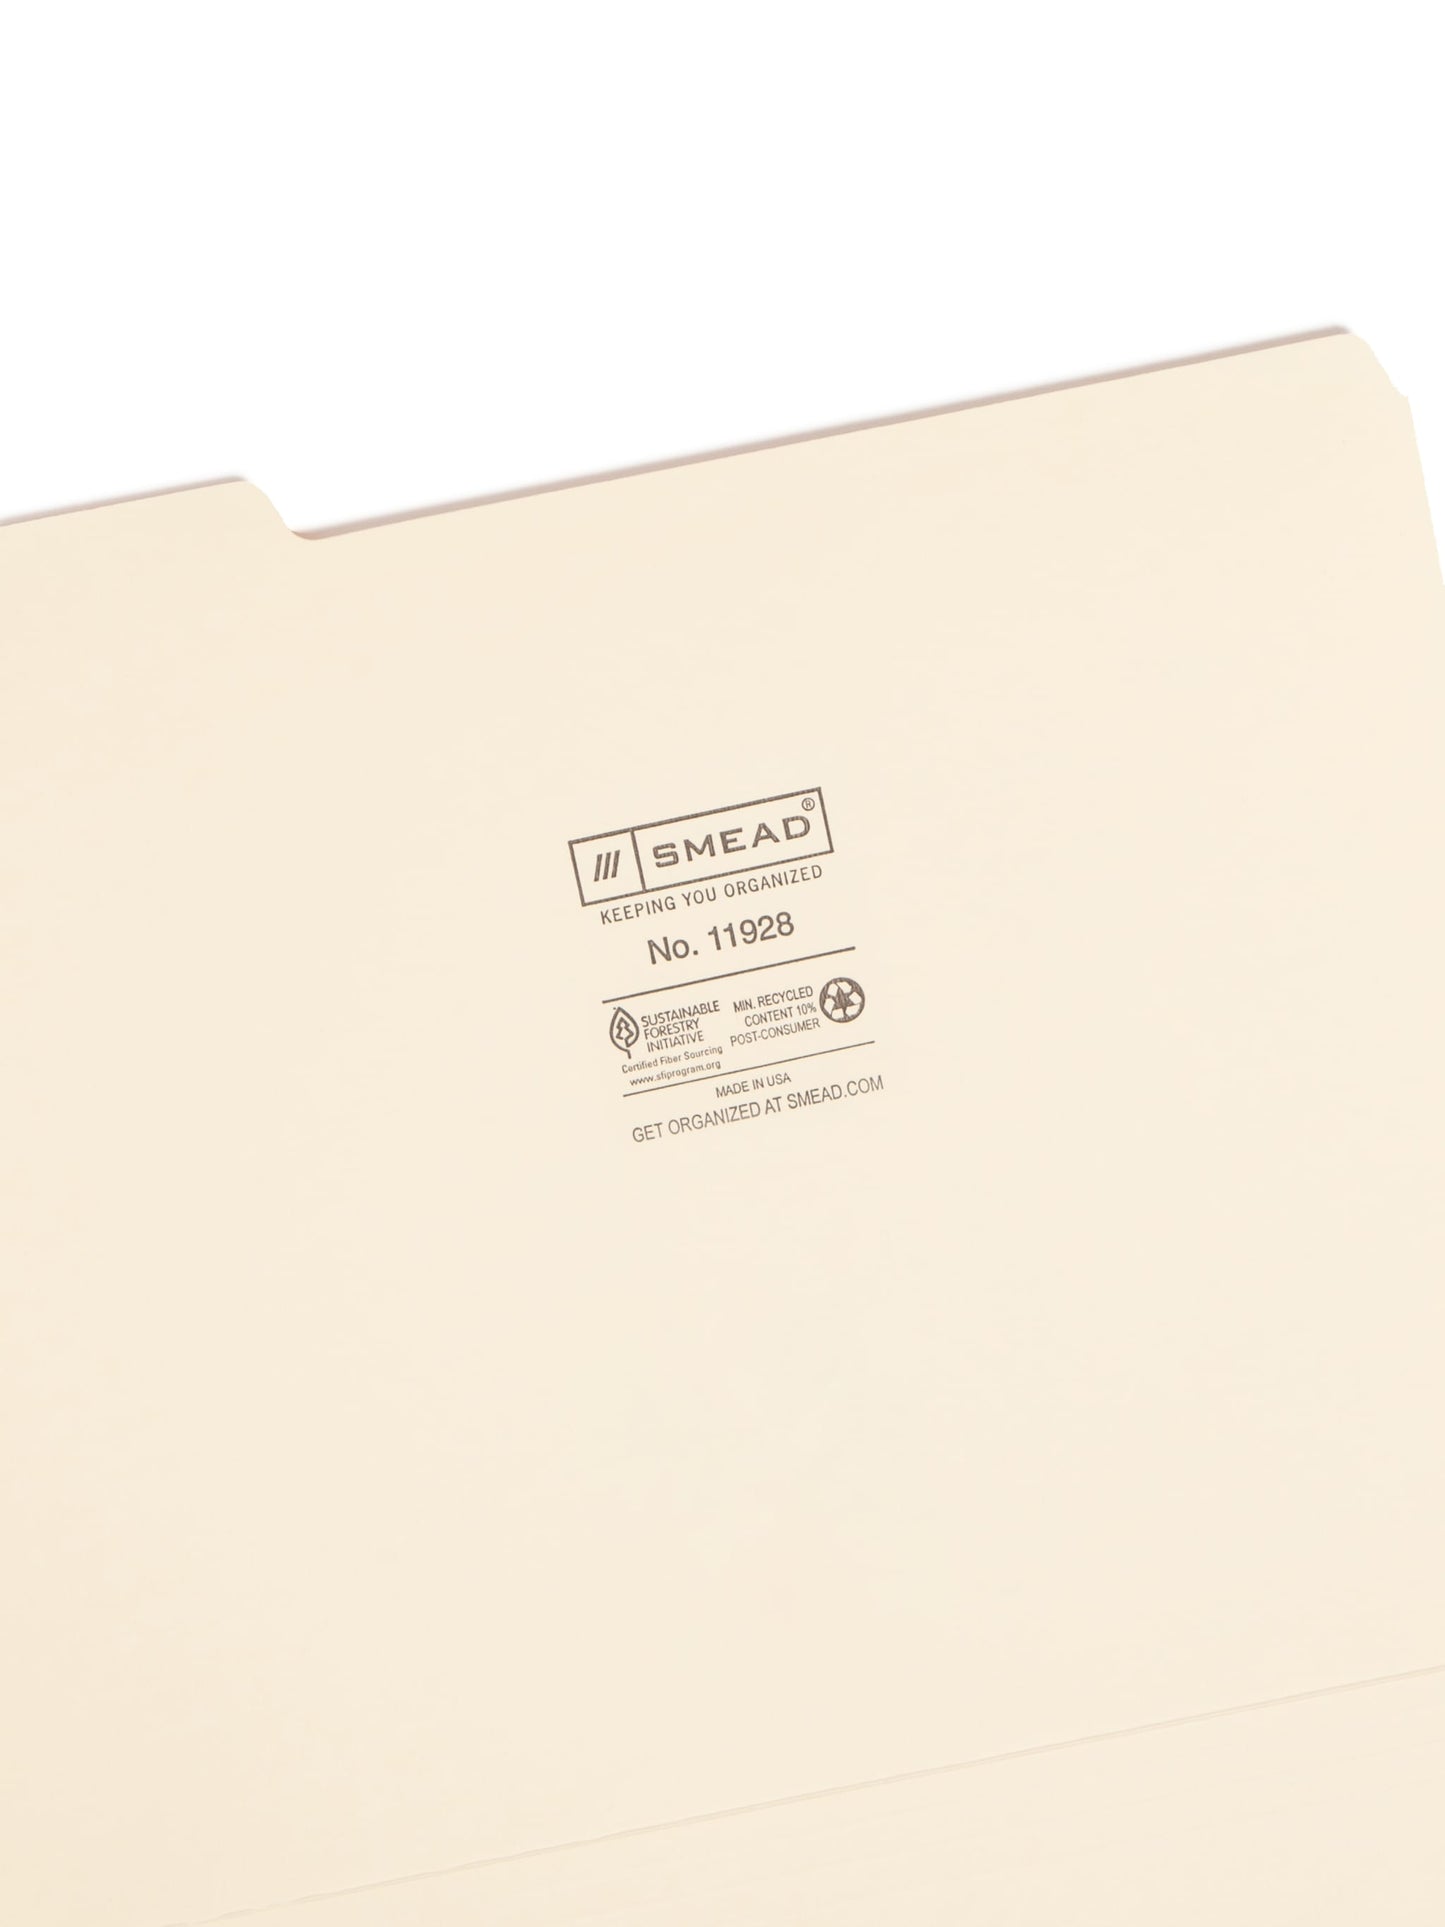 Standard File Folders, 1/3-Cut Tab, Manila Color, Letter Size, Set of 1, 086486119283